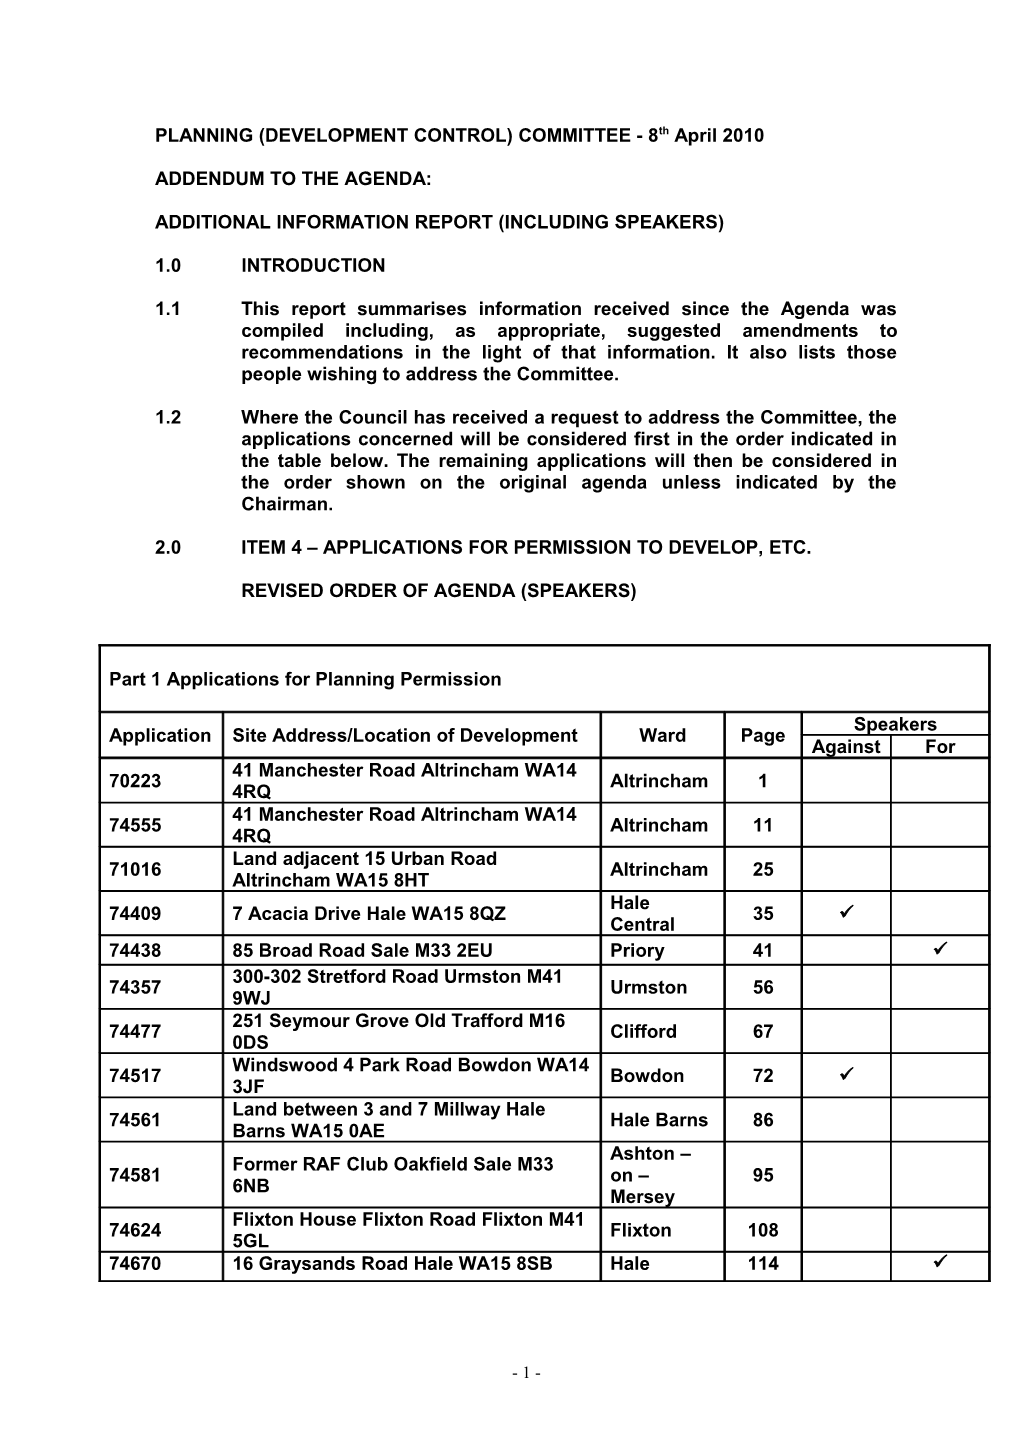 PDC Agenda Item 3 - Additional Information Report - 08/04/10